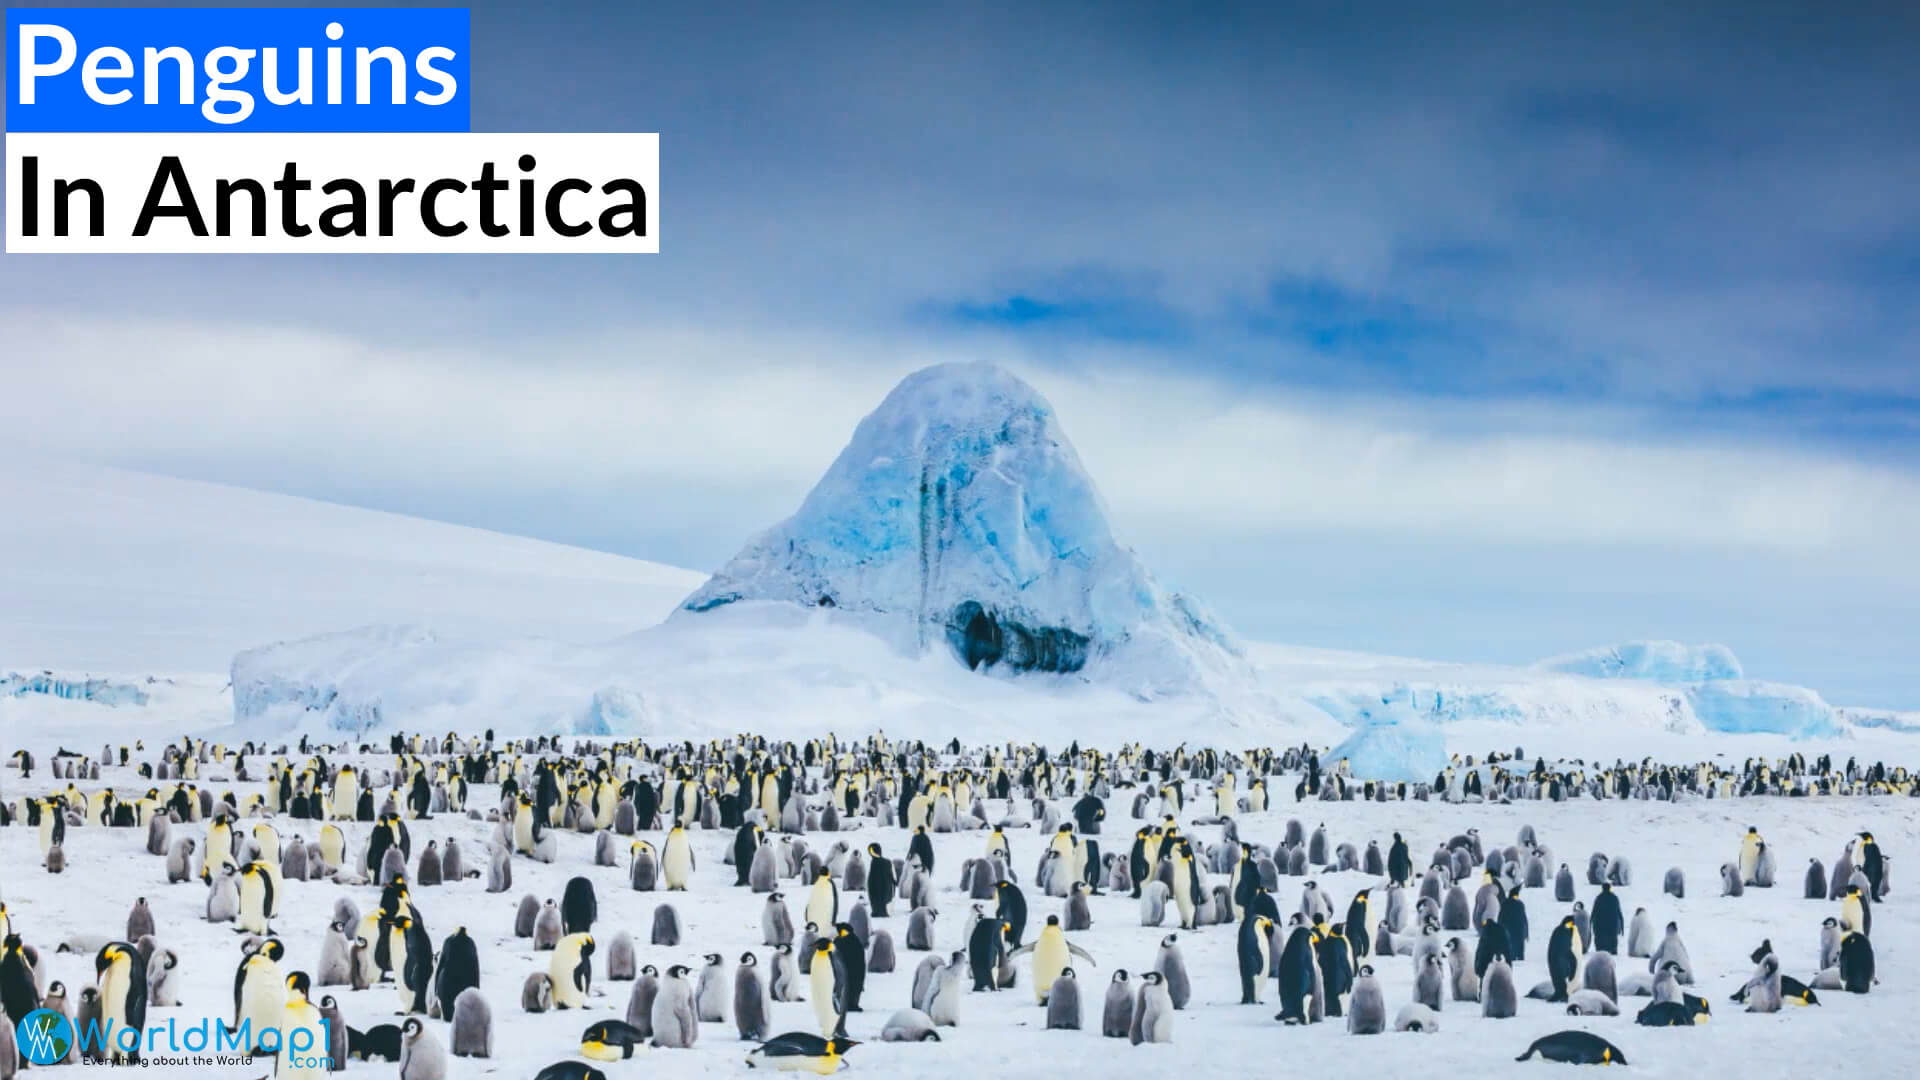 Penguins in Antarctica Winter Time